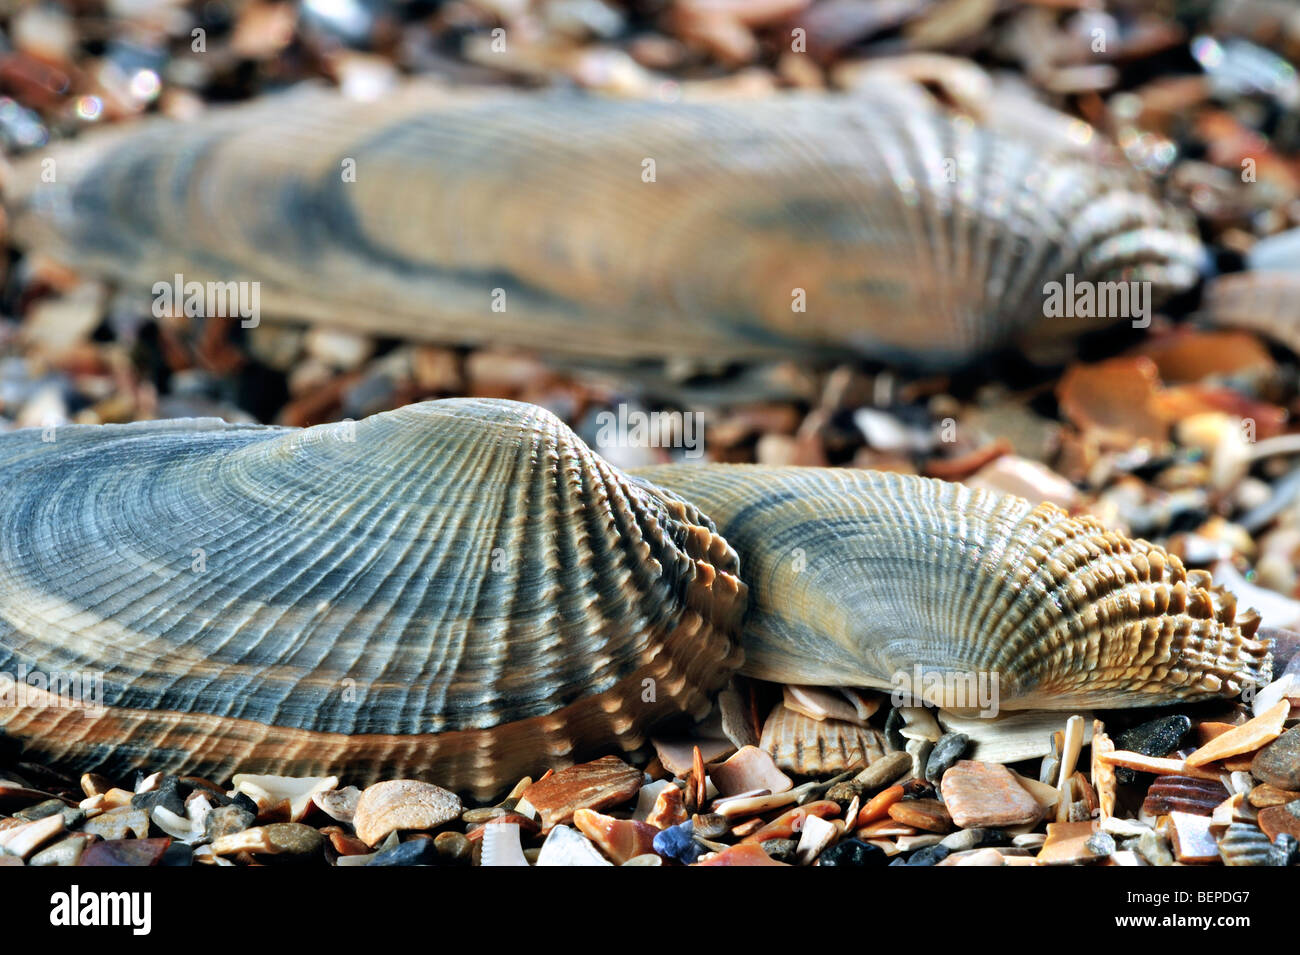 American piddock (Petricola pholadiformis) shells on beach Stock Photo